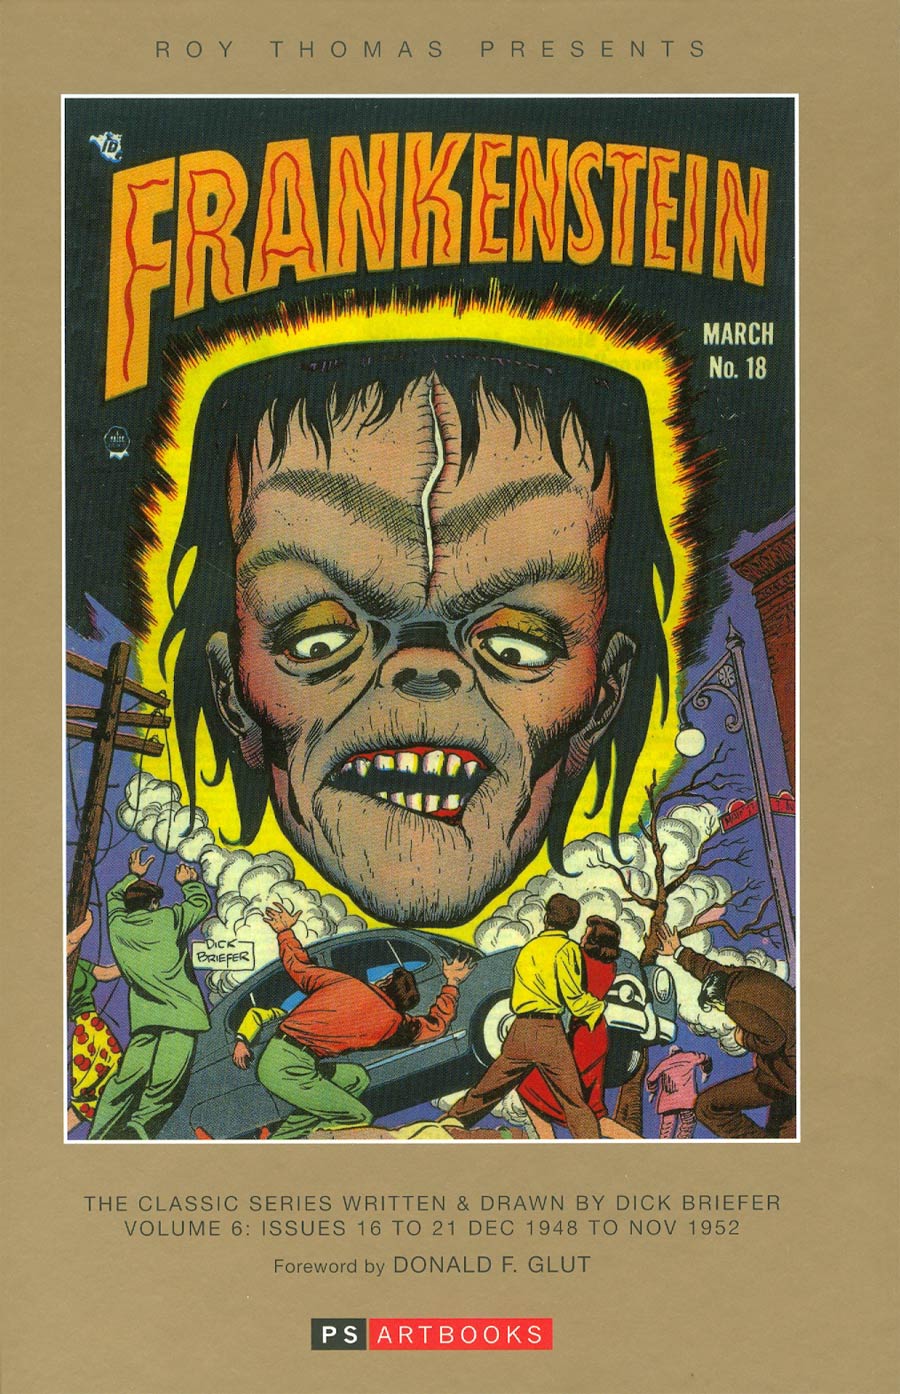 Roy Thomas Presents Dick Briefers Frankenstein Vol 6 1948-1952 HC